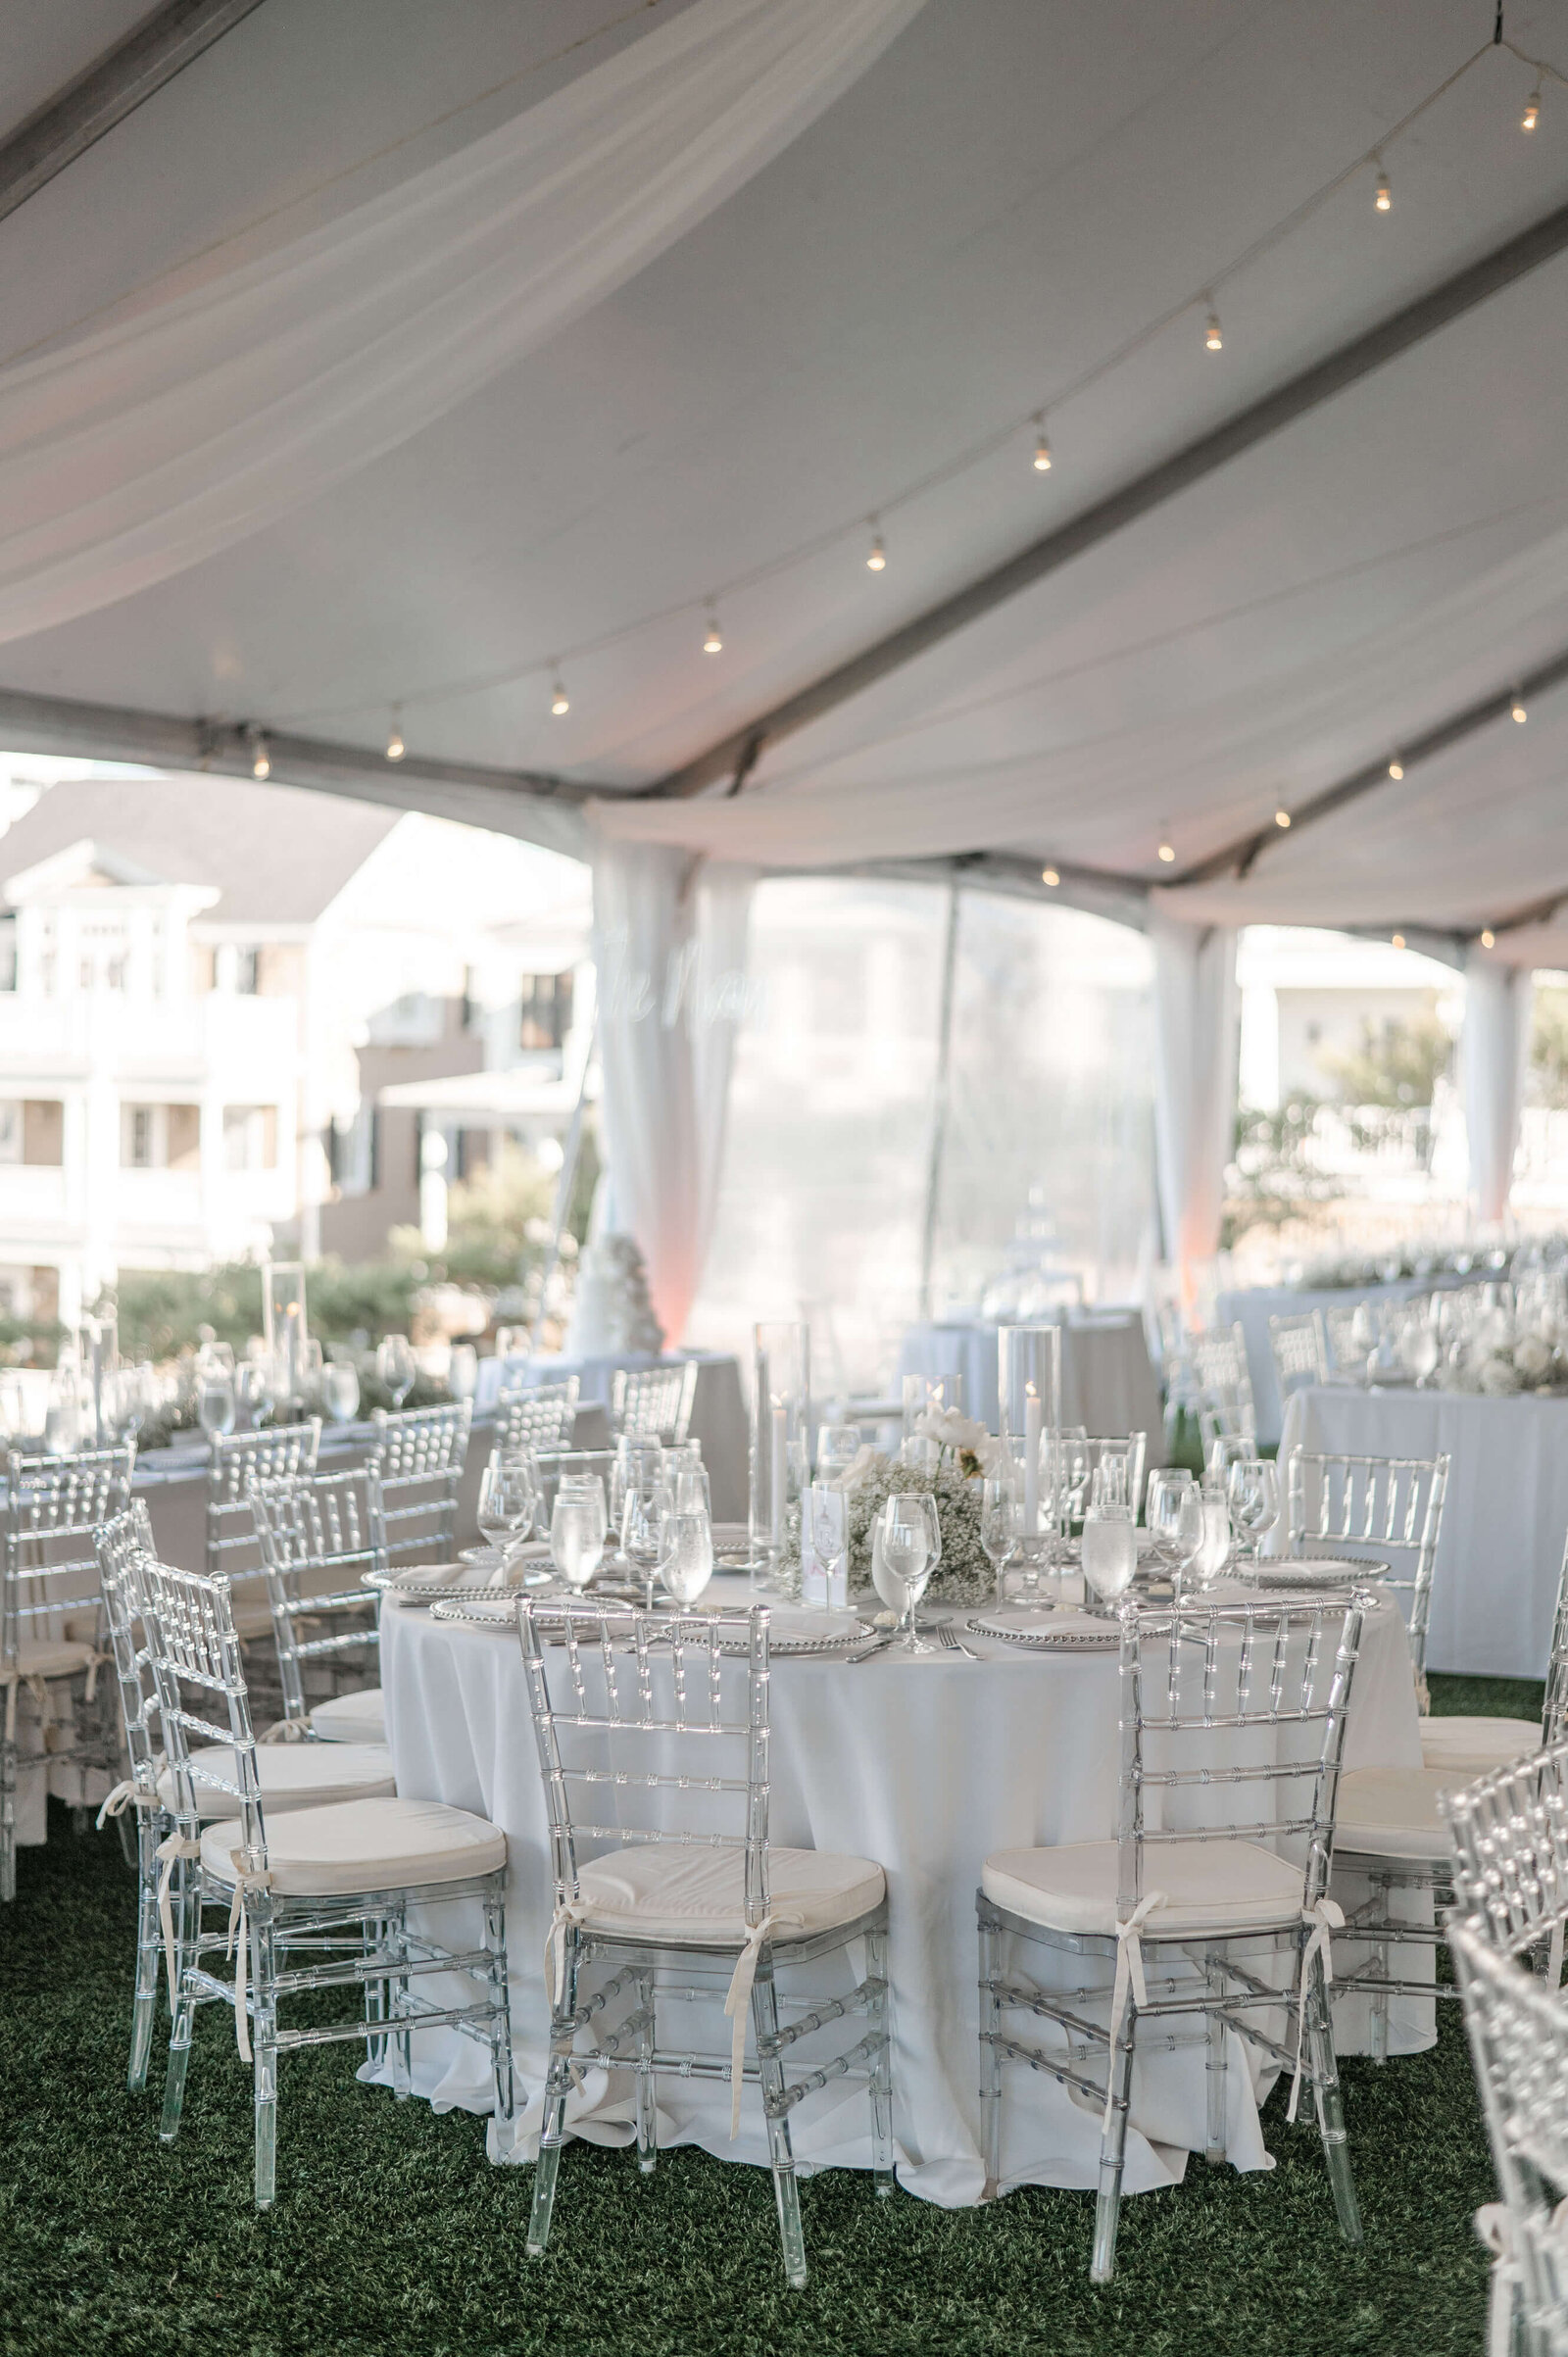 Cavalier-Hotel-Virginia-Beach-Wedding-Planners-Sincerely-Jane-Events-2450